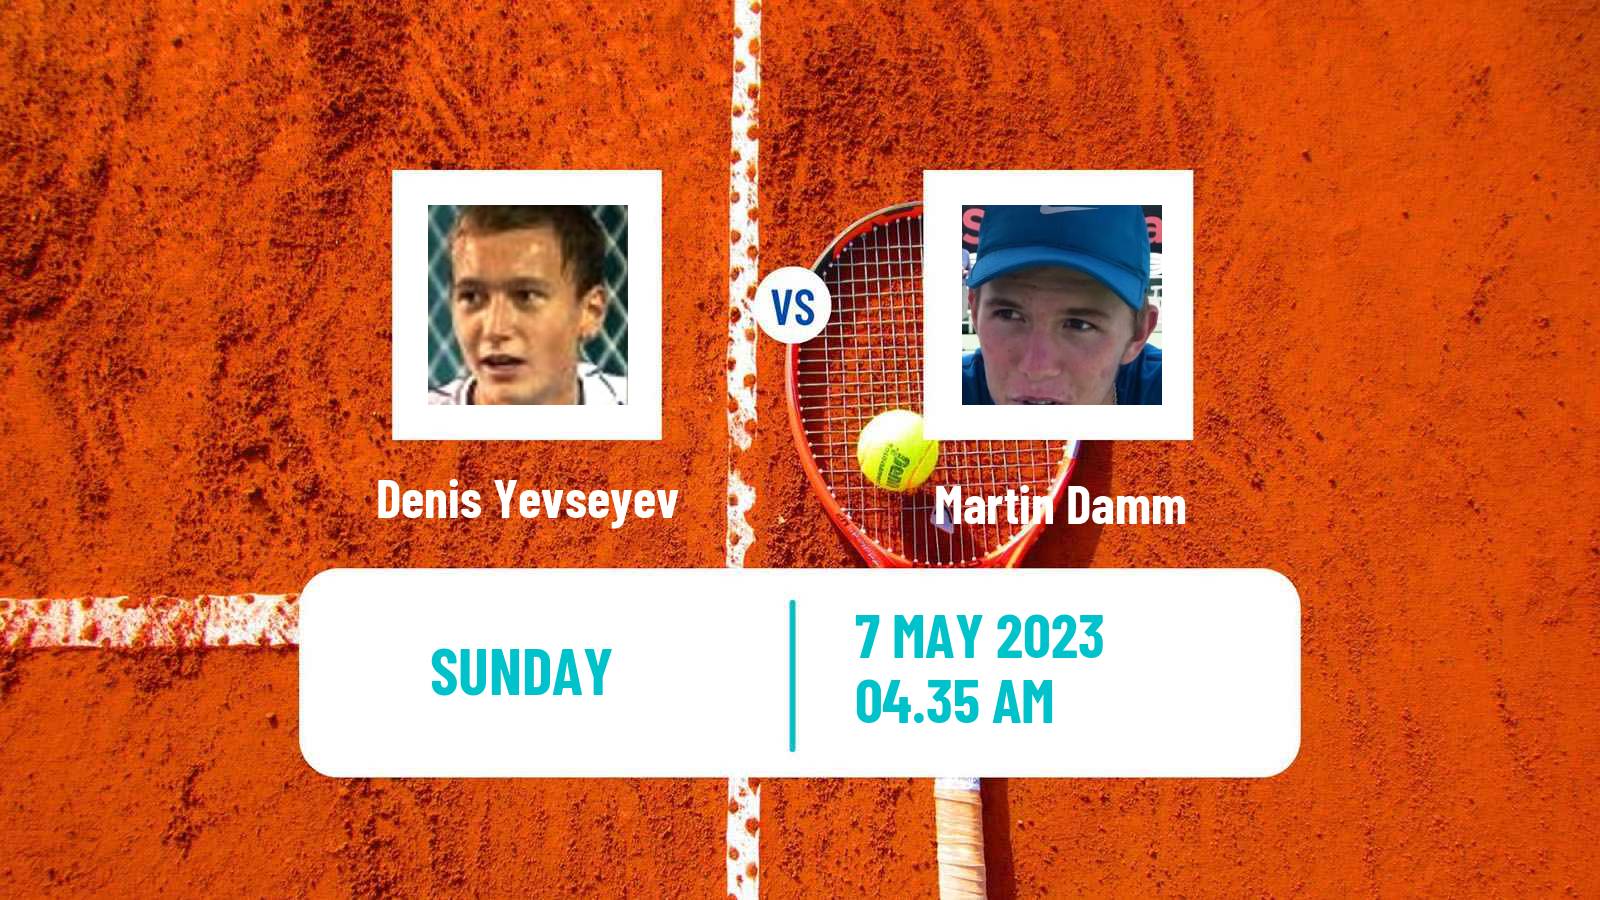 Tennis ATP Challenger Denis Yevseyev - Martin Damm